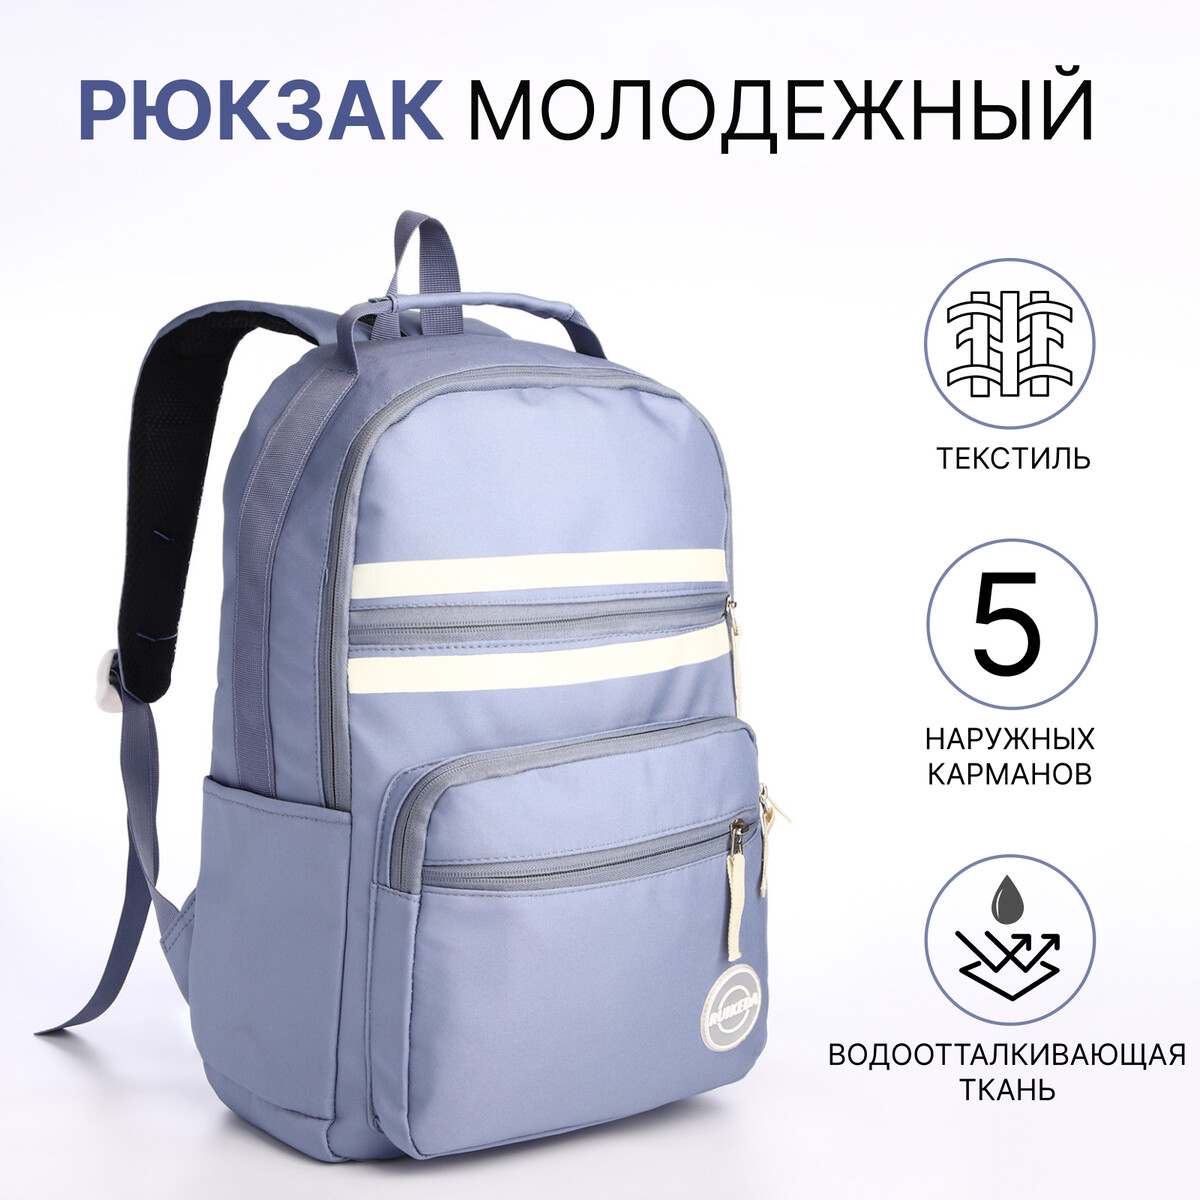 Рюкзак молодежный из текстиля на молнии, 5 карманов, цвет синий рюкзак туристический 35 л с увеличением отдел на молнии 5 наружных карманов синий